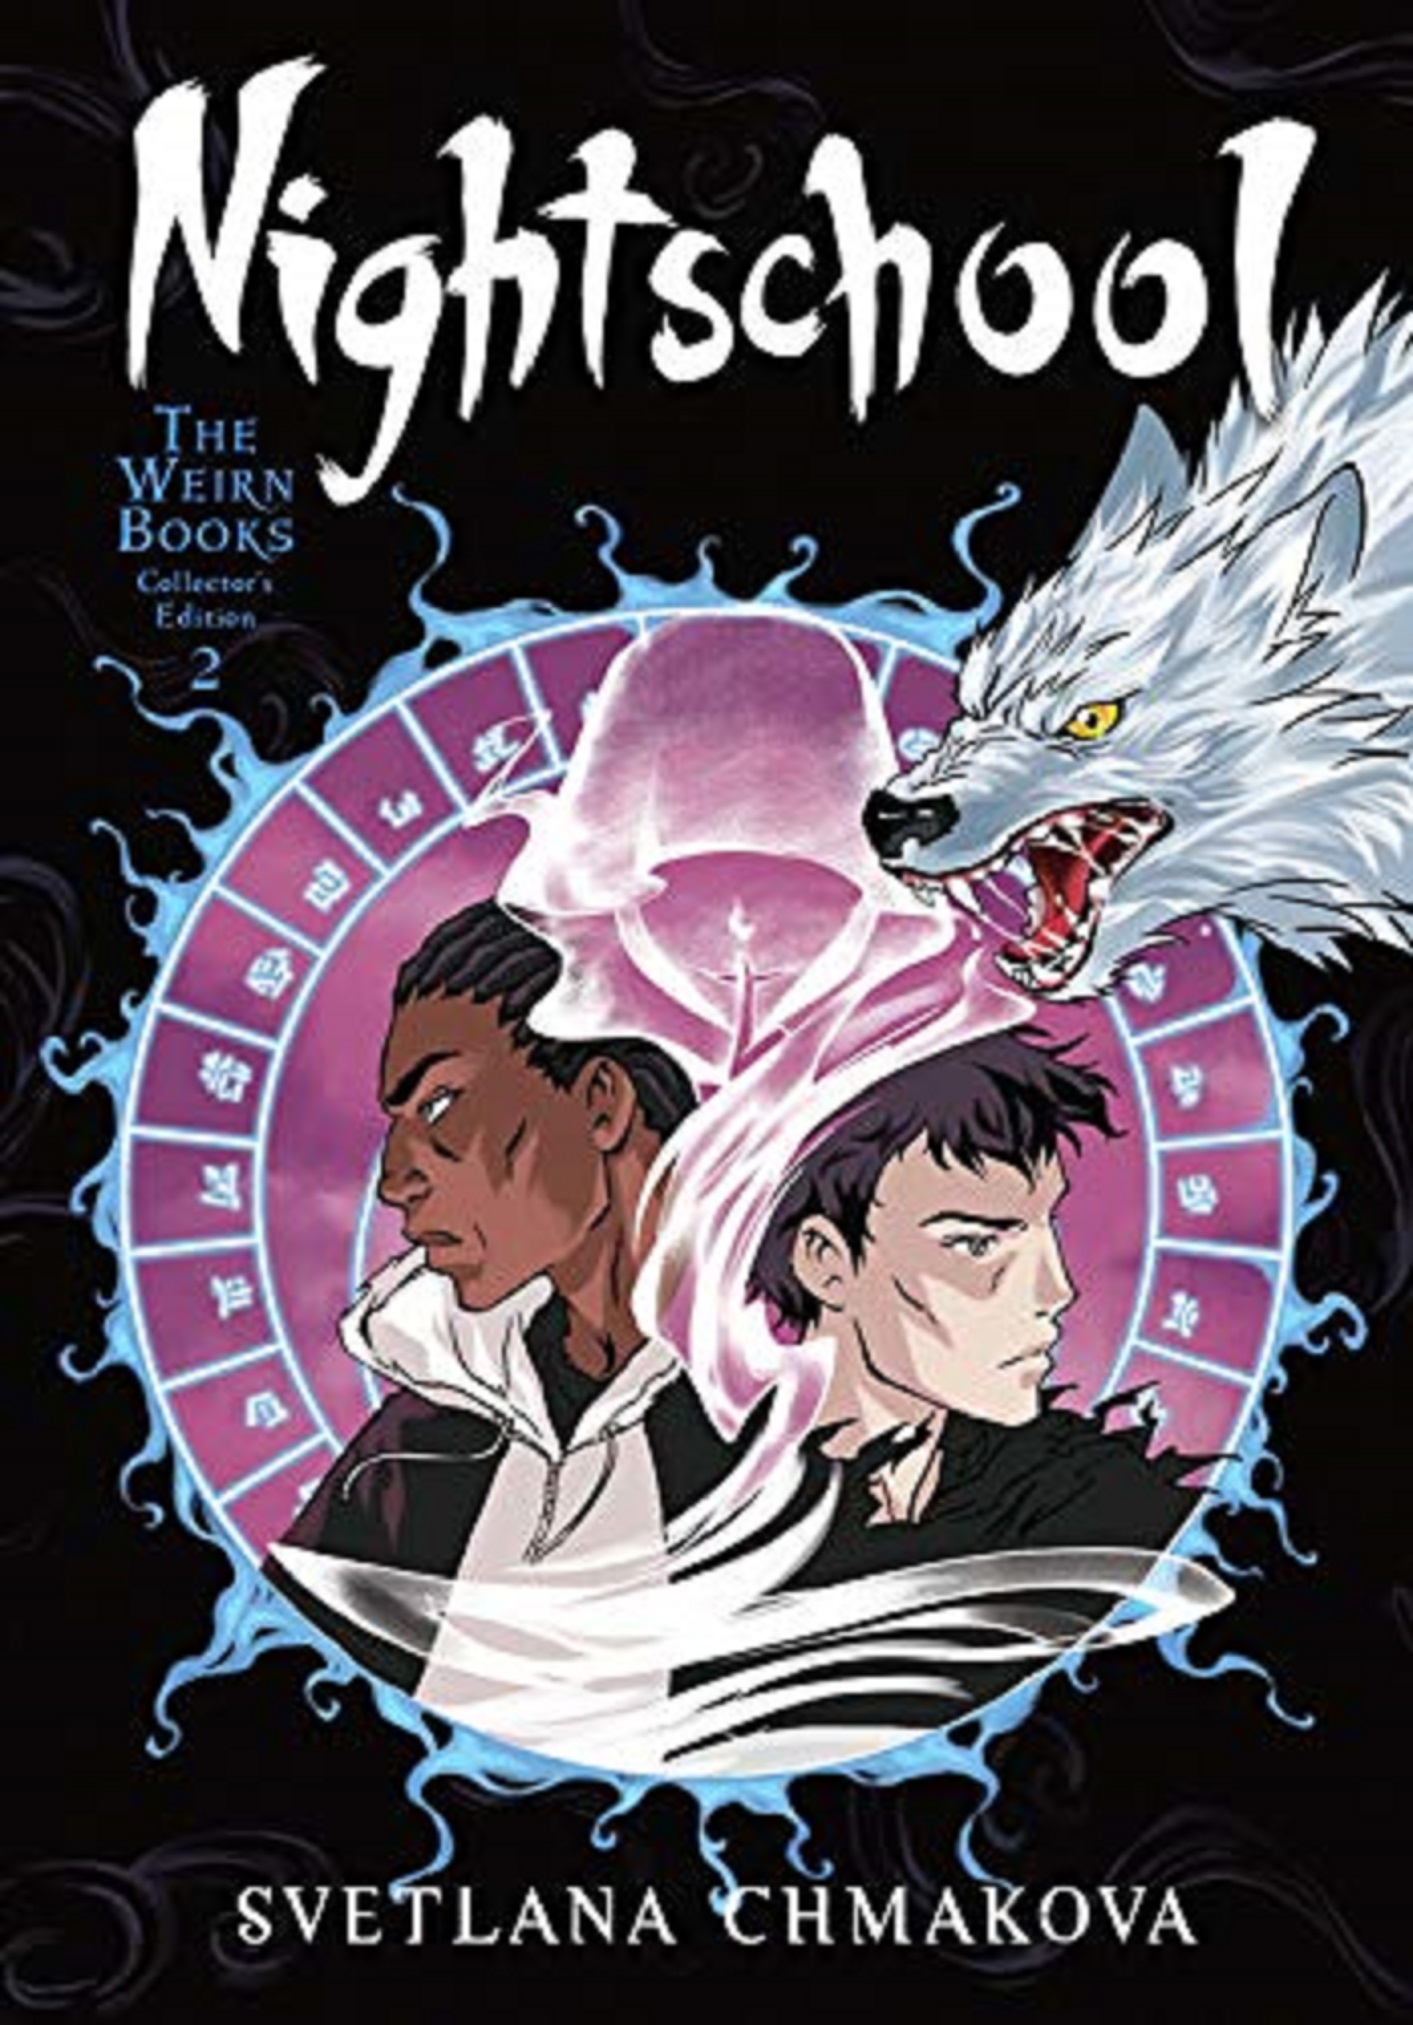 Nightschool: The Weirn Books Collector's Edition - Volume 2 | Svetlana Chmakova